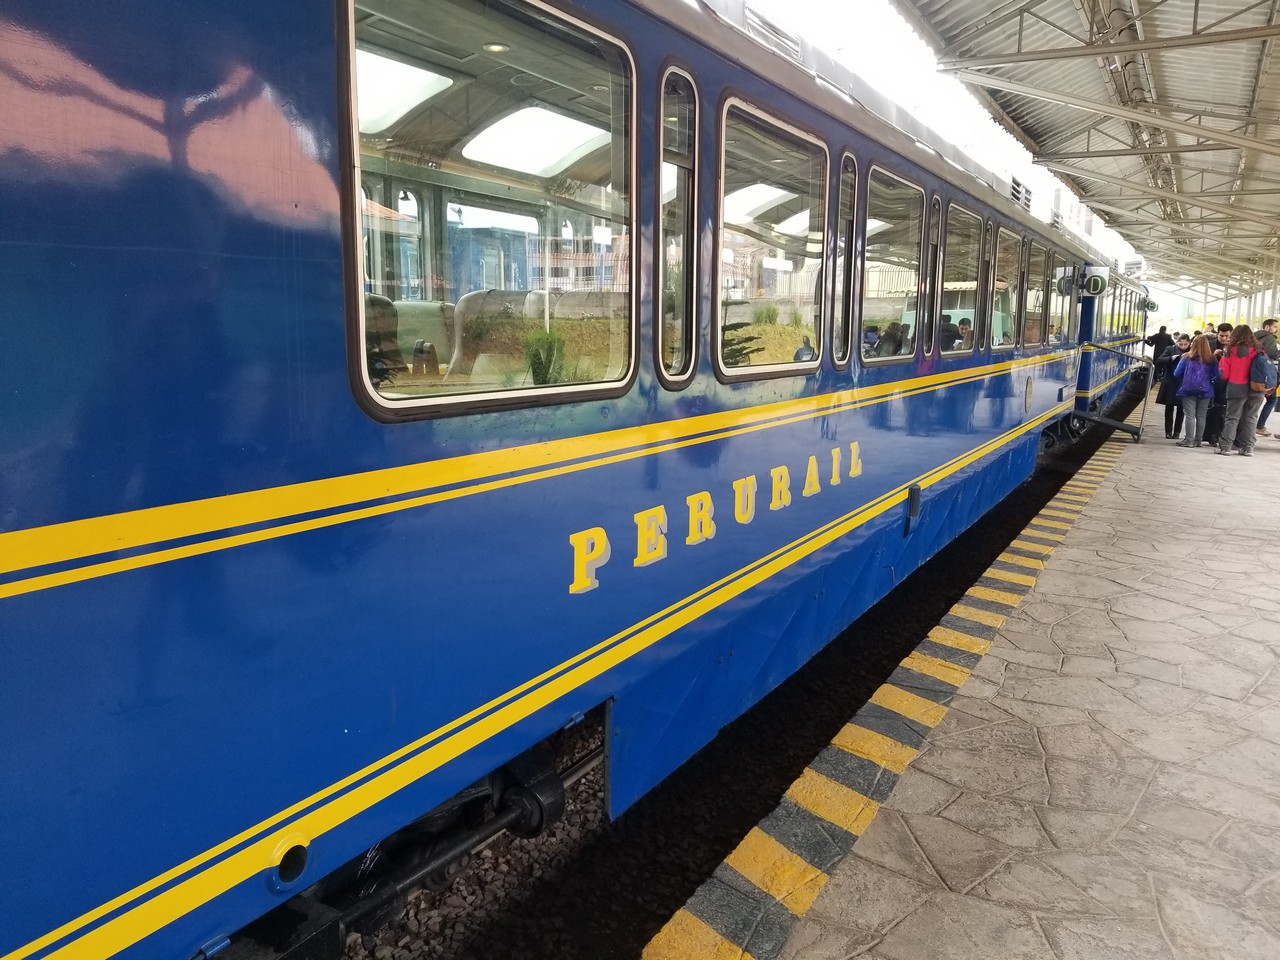 a blue train at a train station